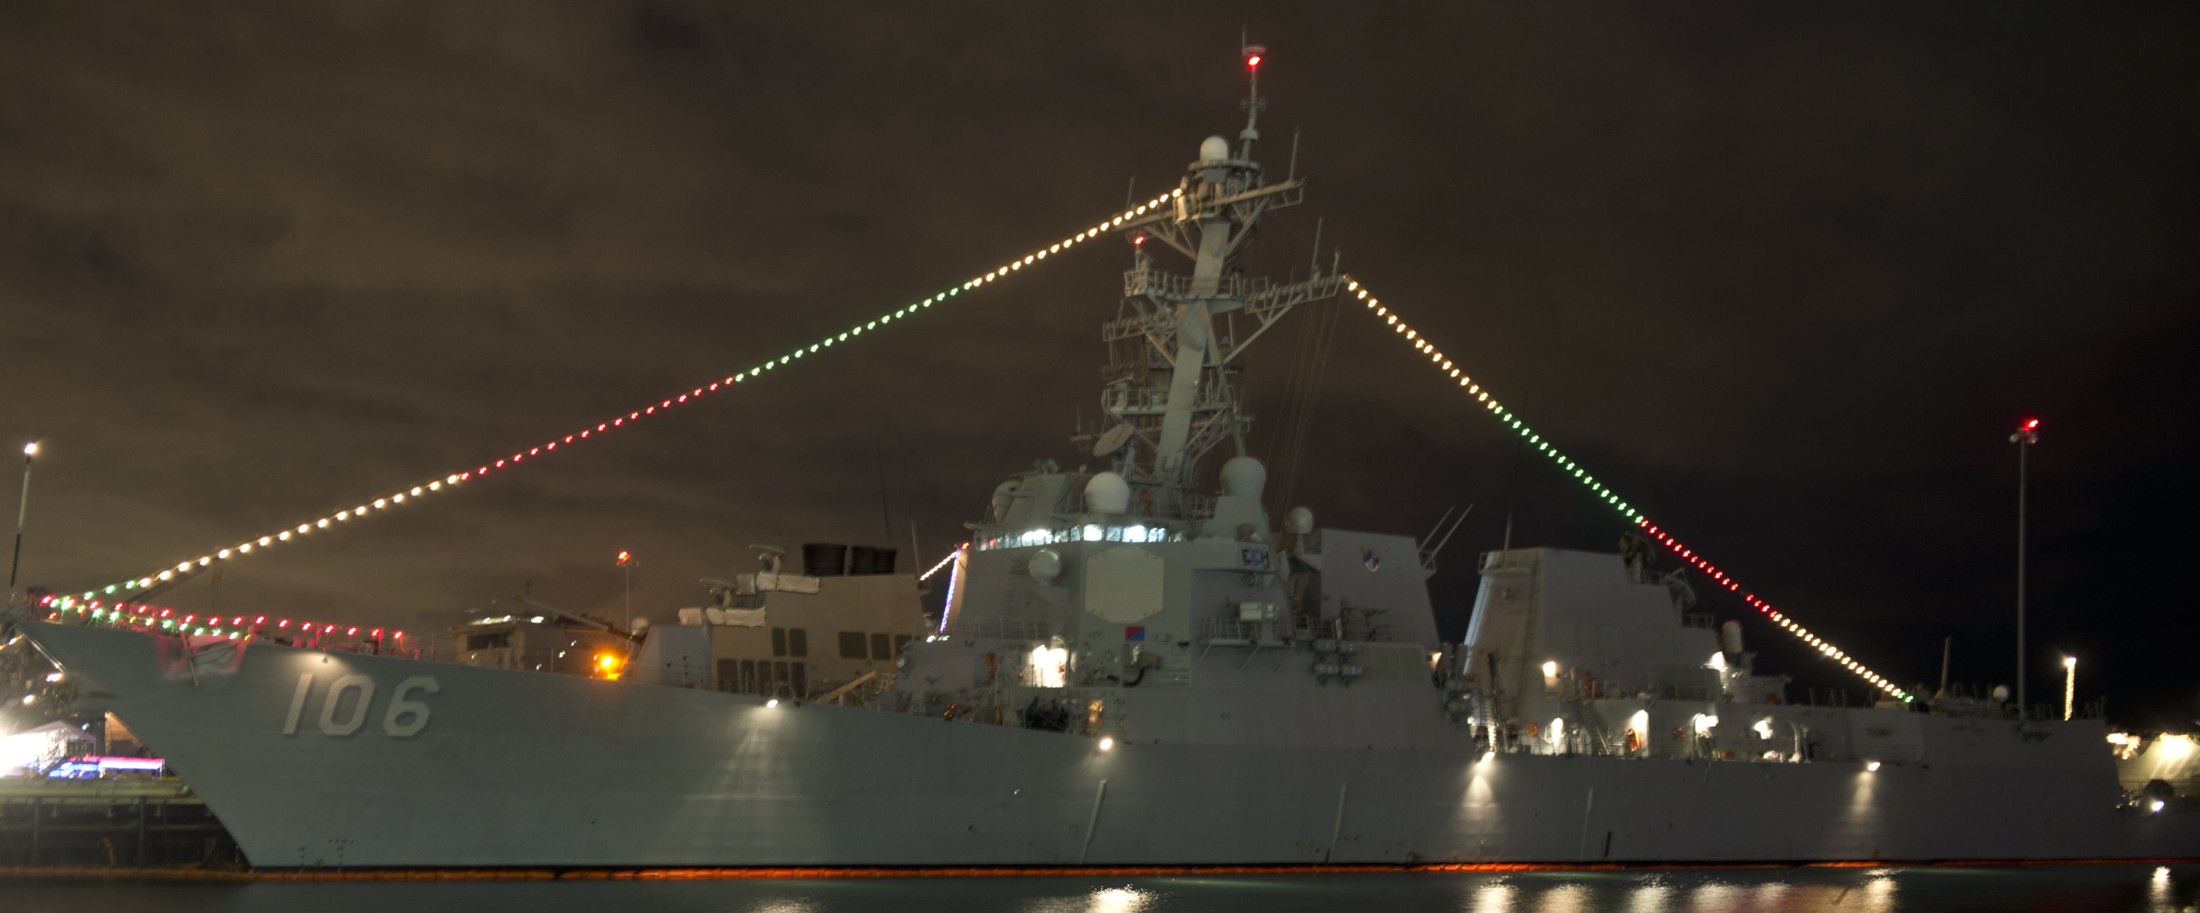 ddg-106 uss stockdale arleigh burke class guided missile destroyer aegis us navy san diego christmas lights 73